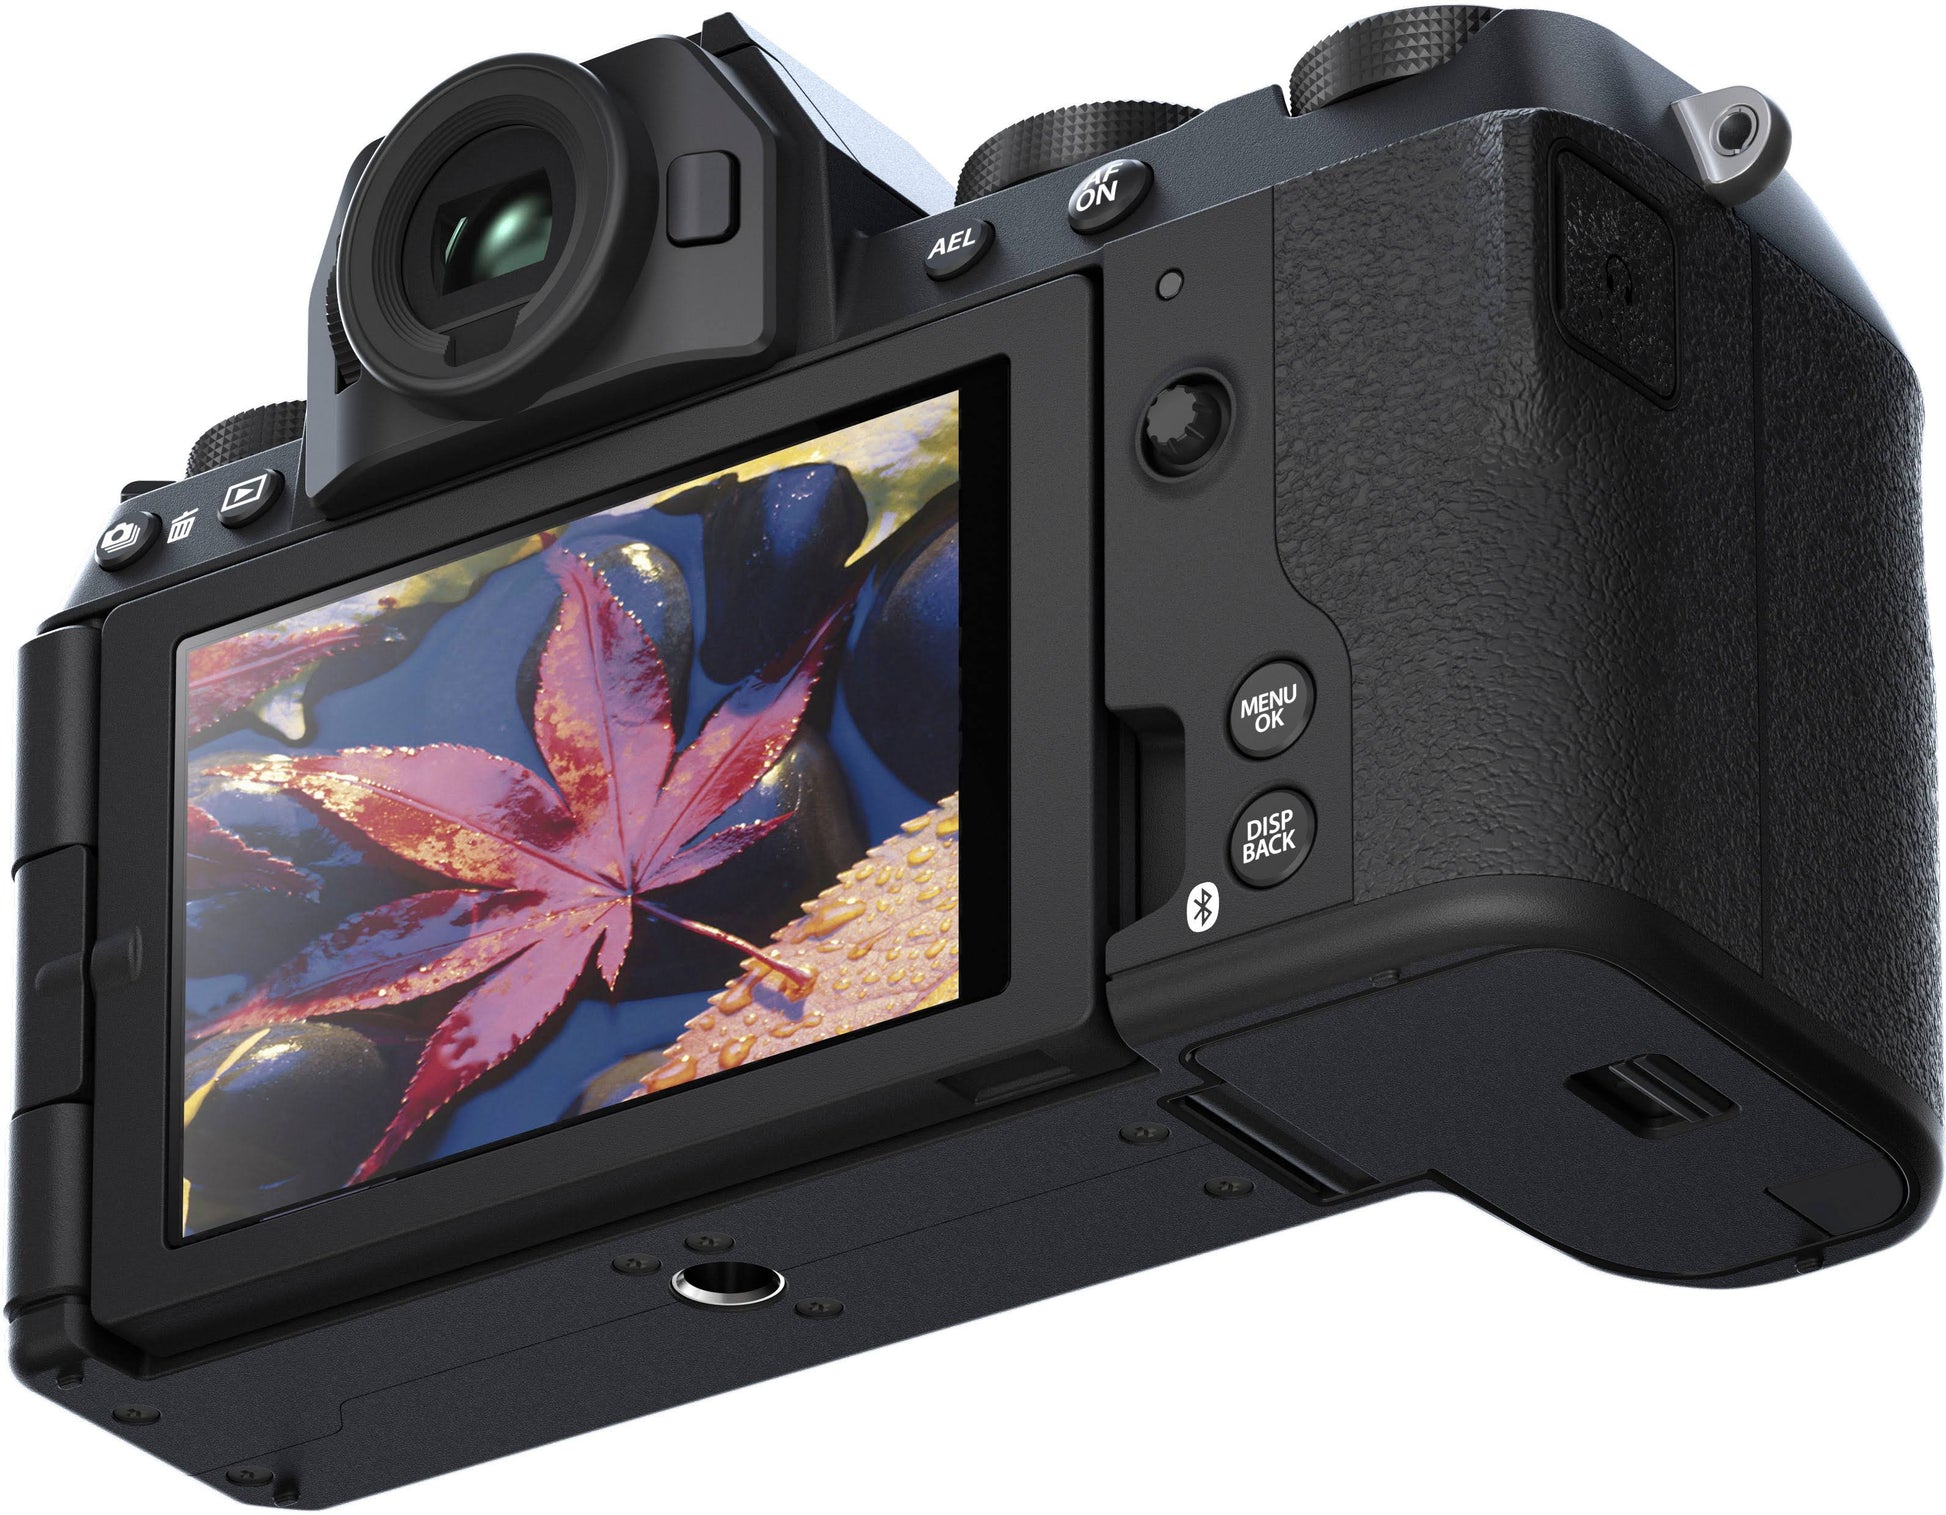 Fujifilm X-S20 Mirrorless Camera with XF 16-50mm f/2.8-4.8 R Lm WR Lens - Black